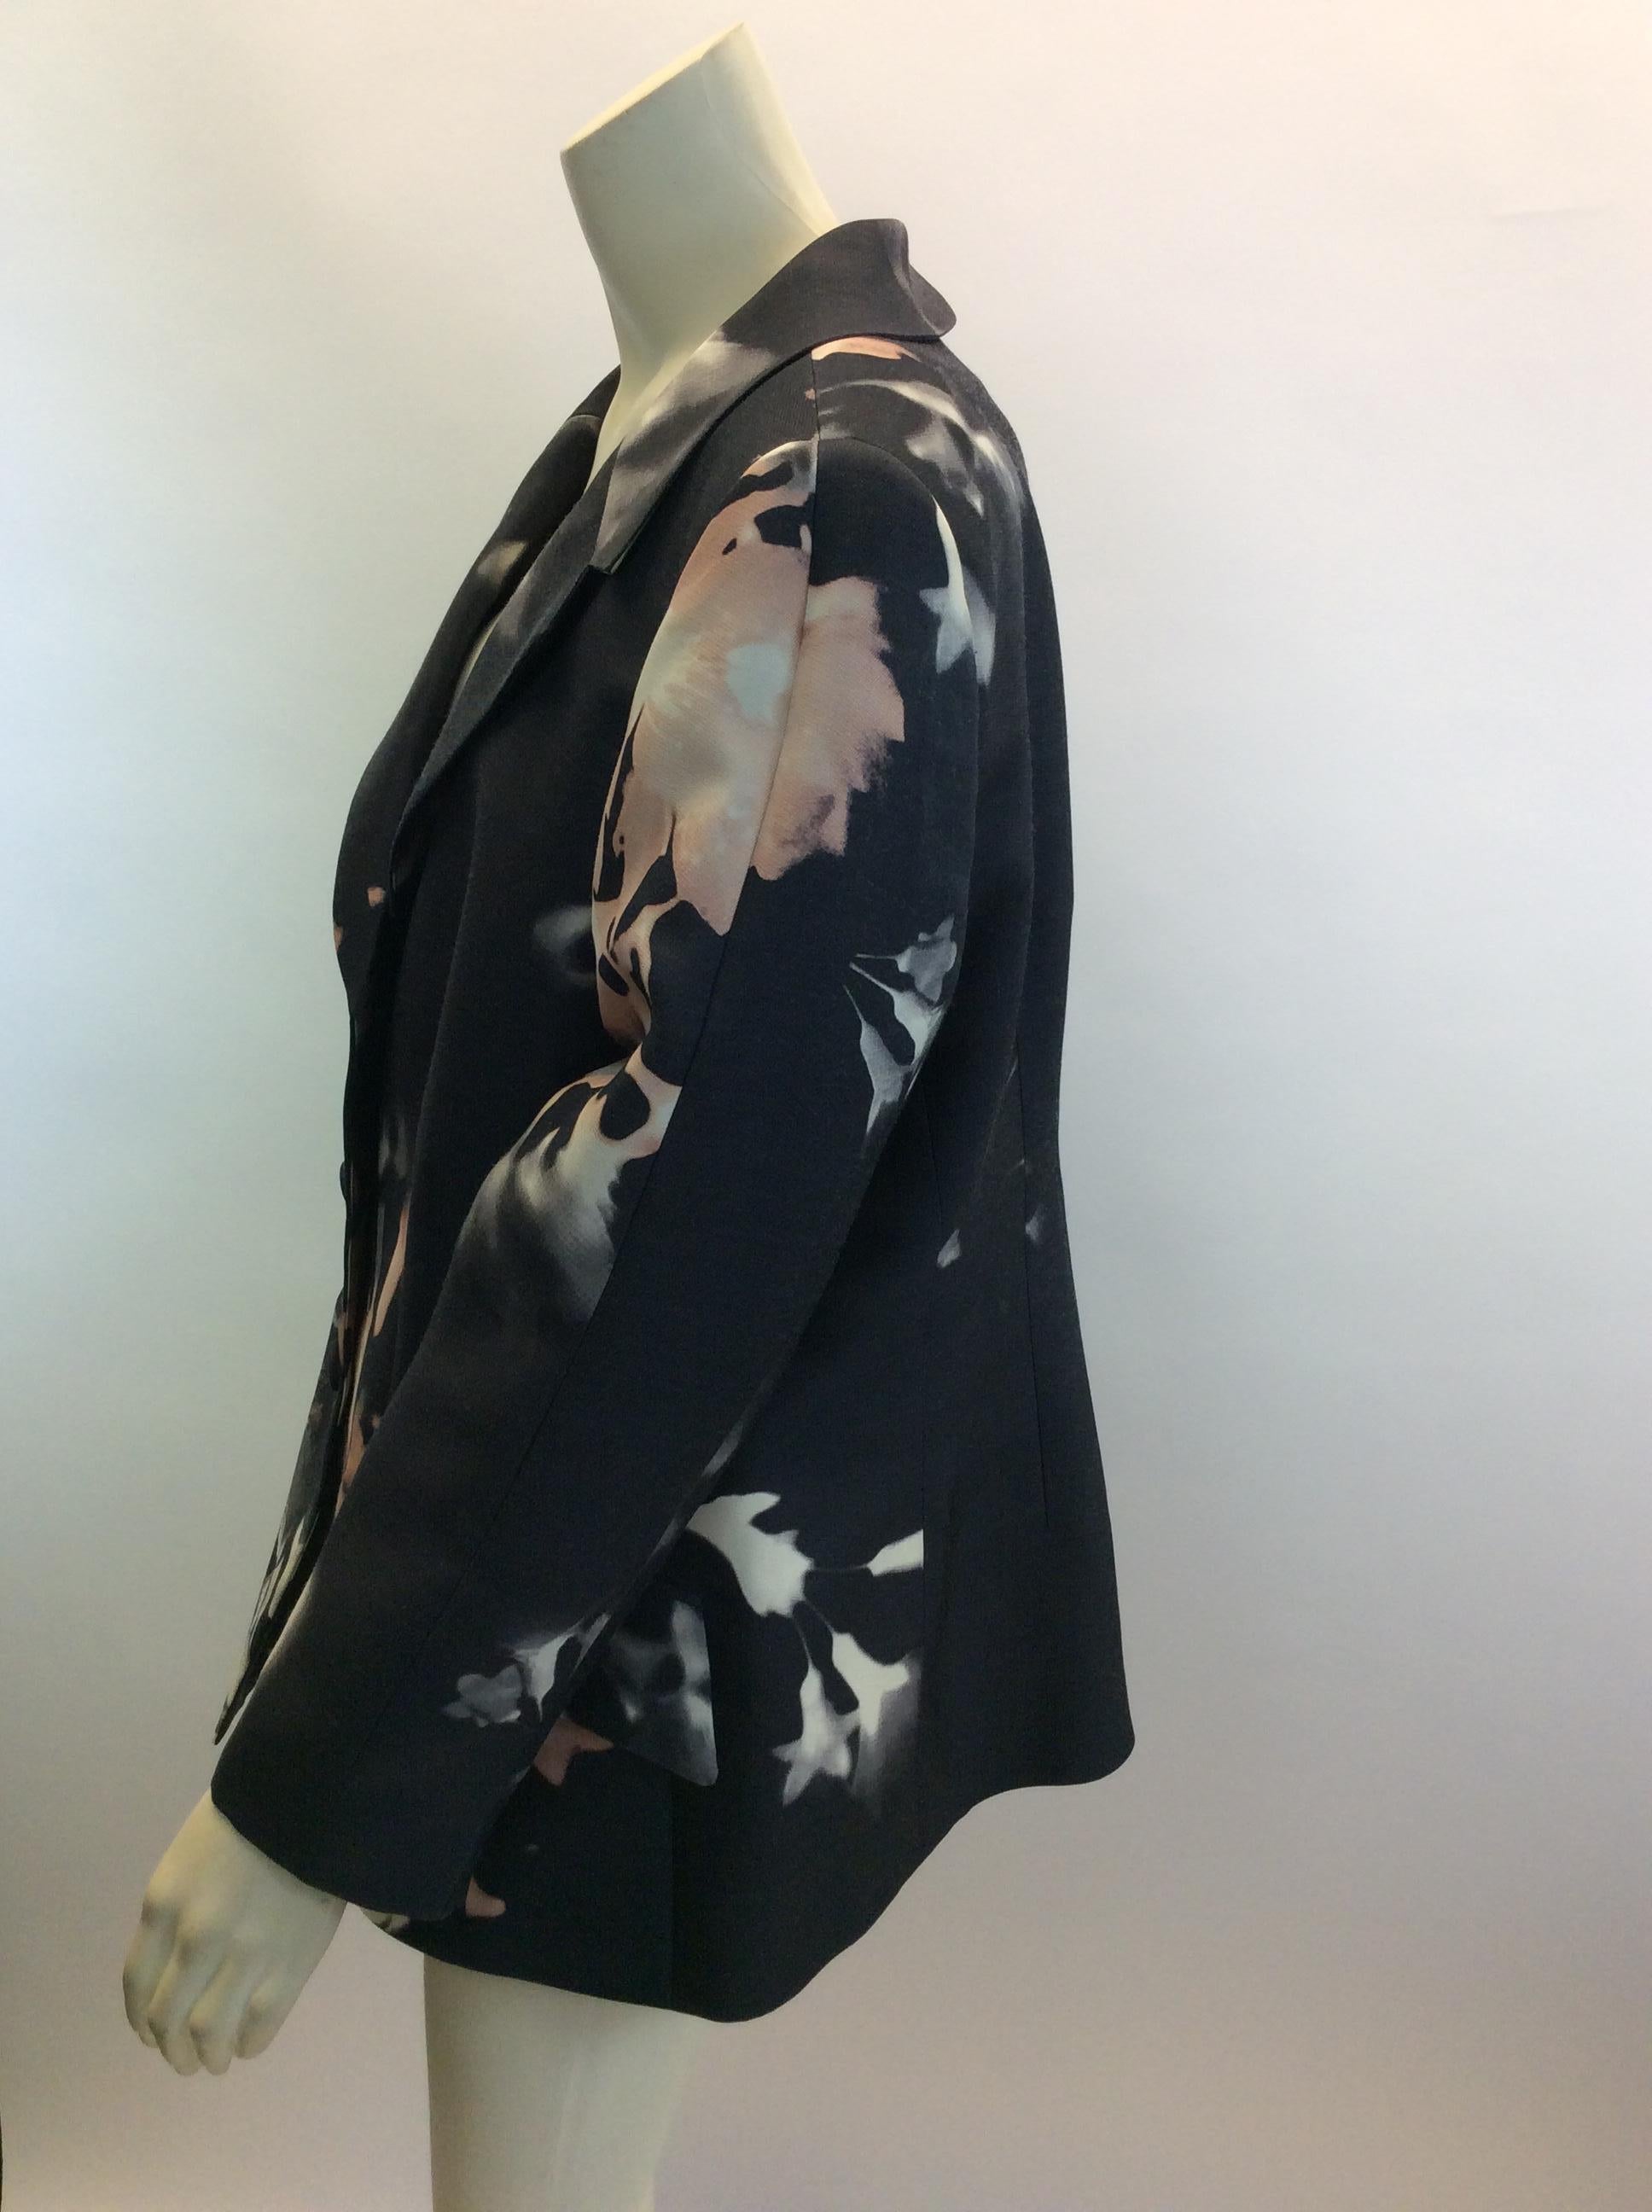 Rena Lange Black and Pink Floral Print Jacket
$399
71% Silk, 29% Wool
Size 16
Length 25